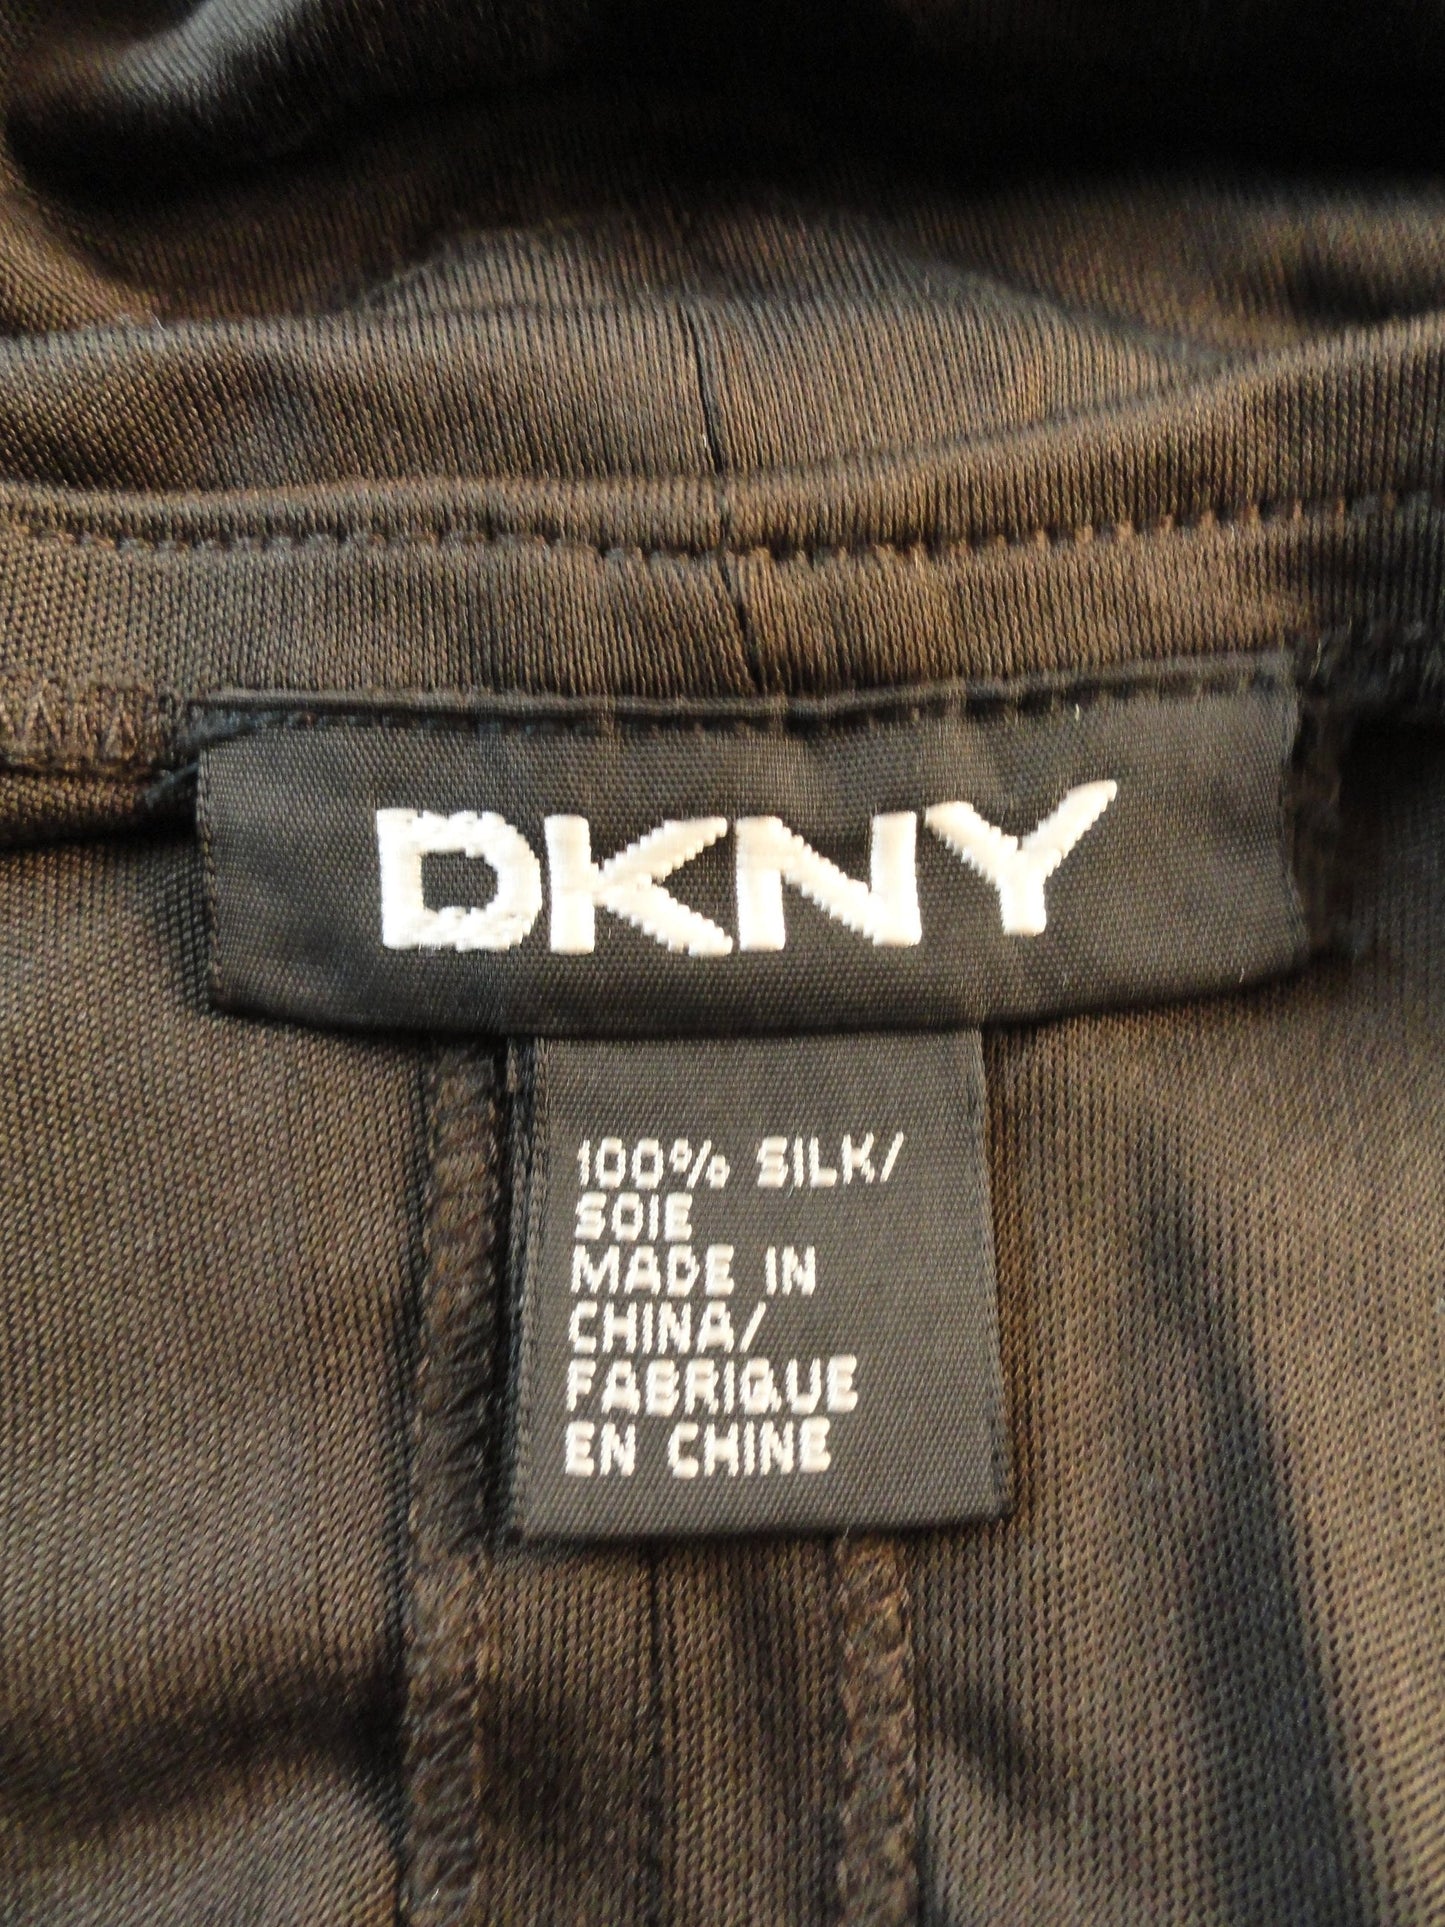 DKNY 70's Skirt Black Foliage Print SKU 000094